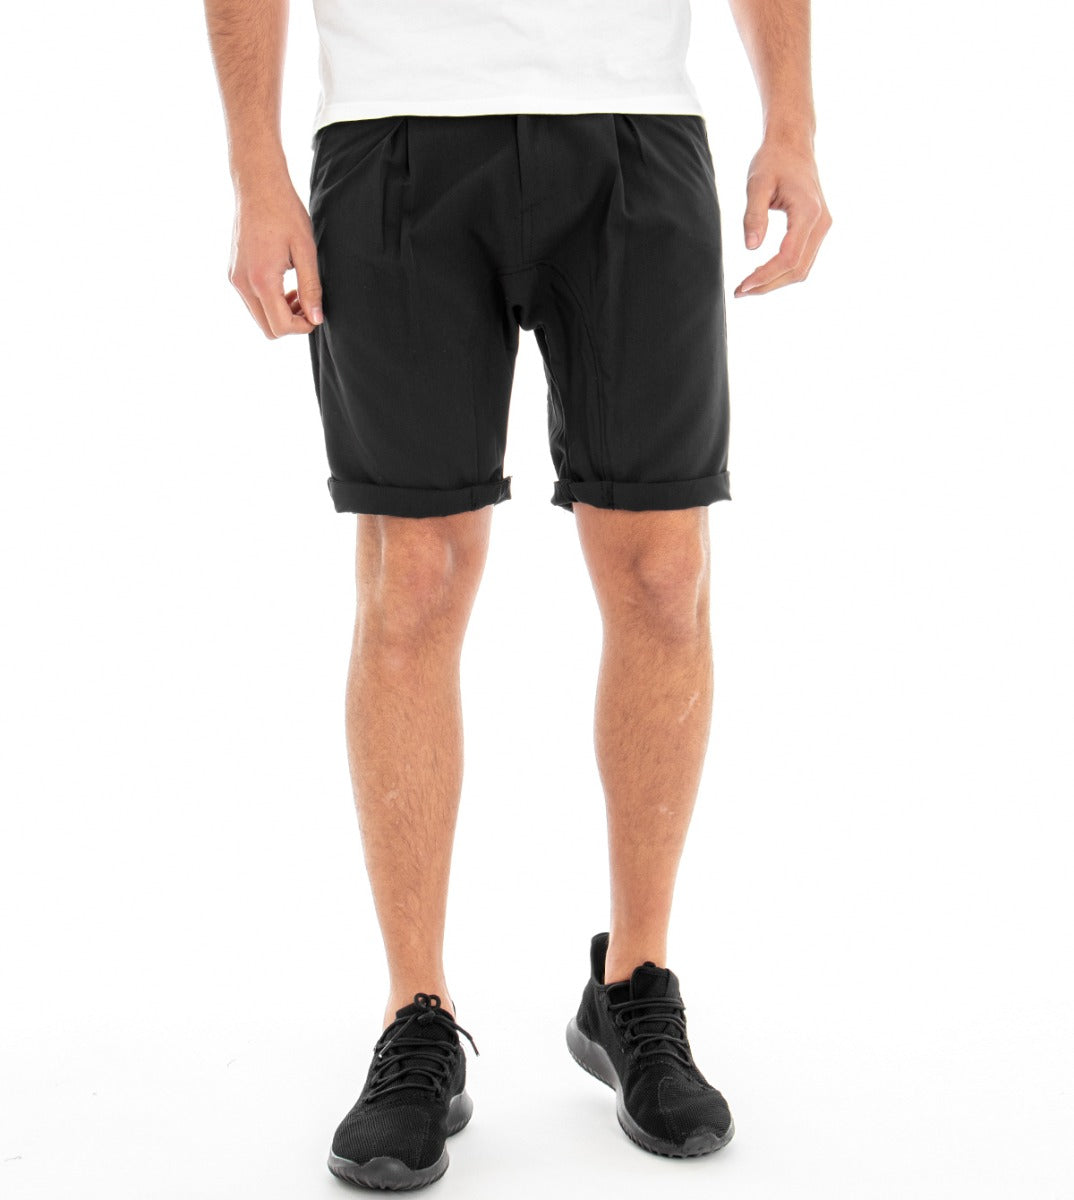 Bermuda Shorts Men's America Pocket Black Pence Low Crotch GIOSAL-PC1299A